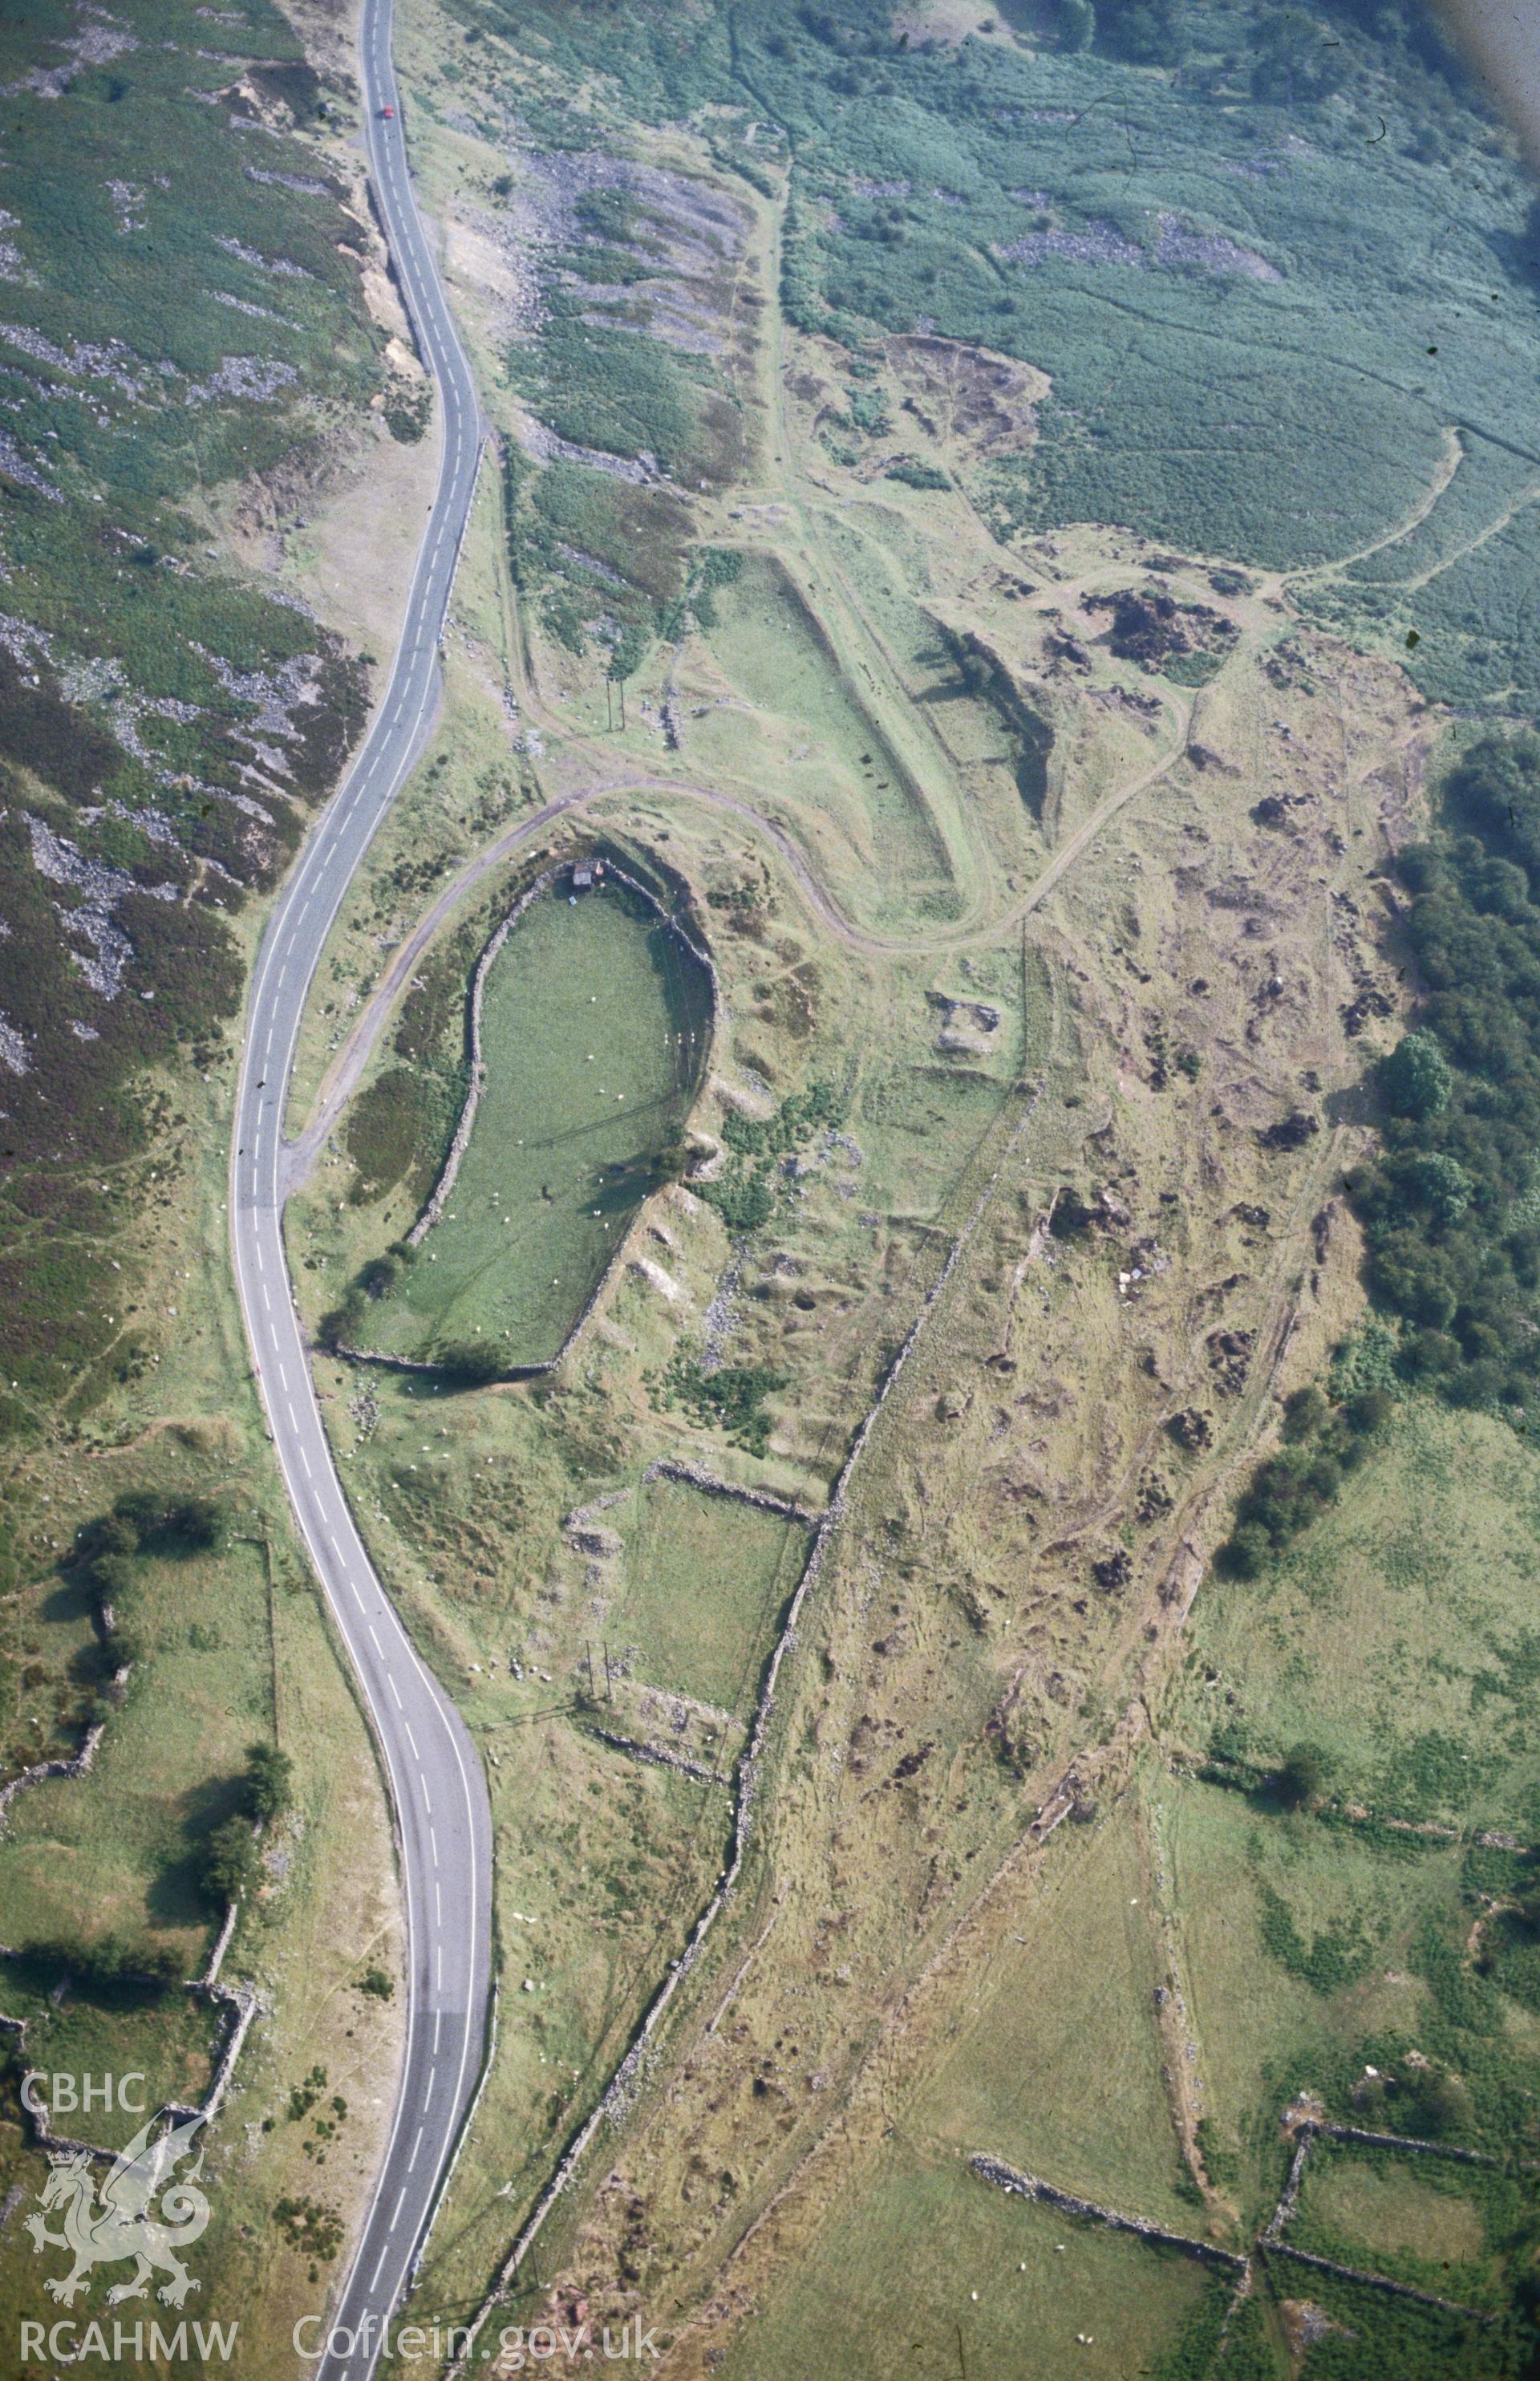 Slide of RCAHMW colour oblique aerial photograph of Garnddyrys Forge, Blorenge, Blaenavon, taken by C.R. Musson, 3/8/1988.